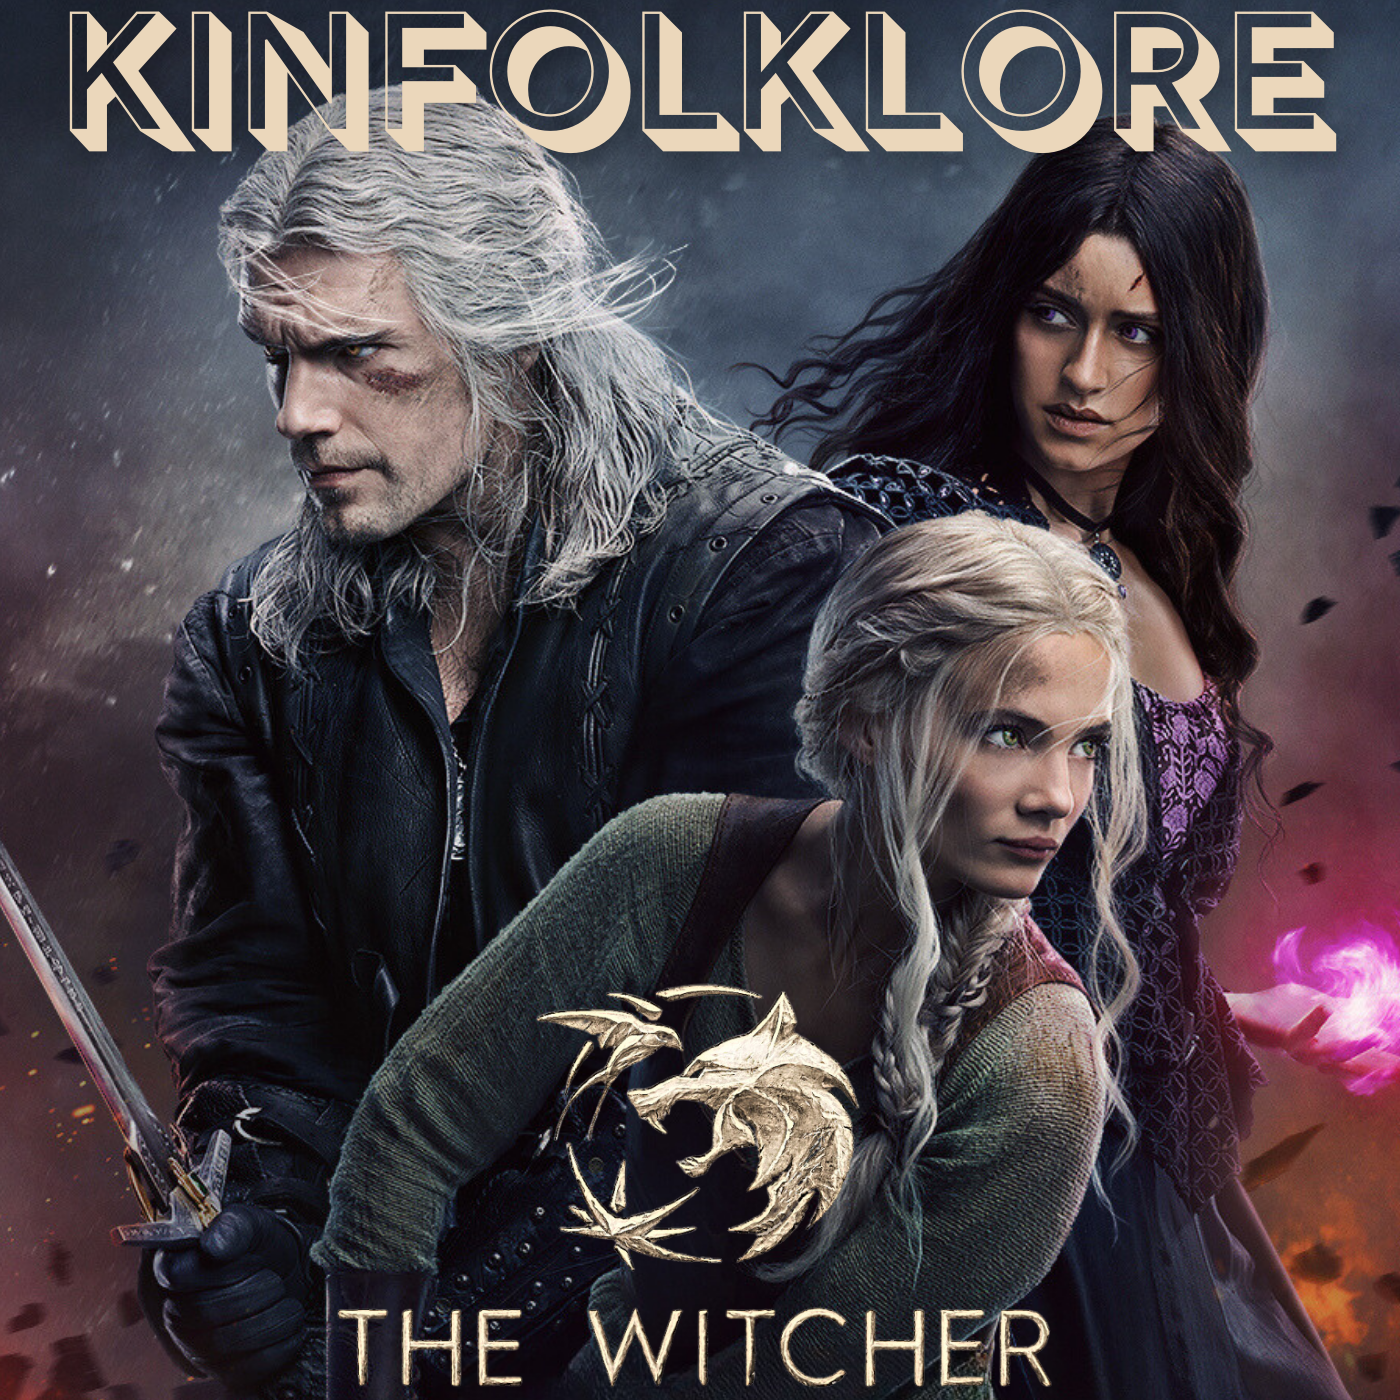 S11 Ep2: Kinfolklore: Witcher Season 3 (Episode 3 & 4)